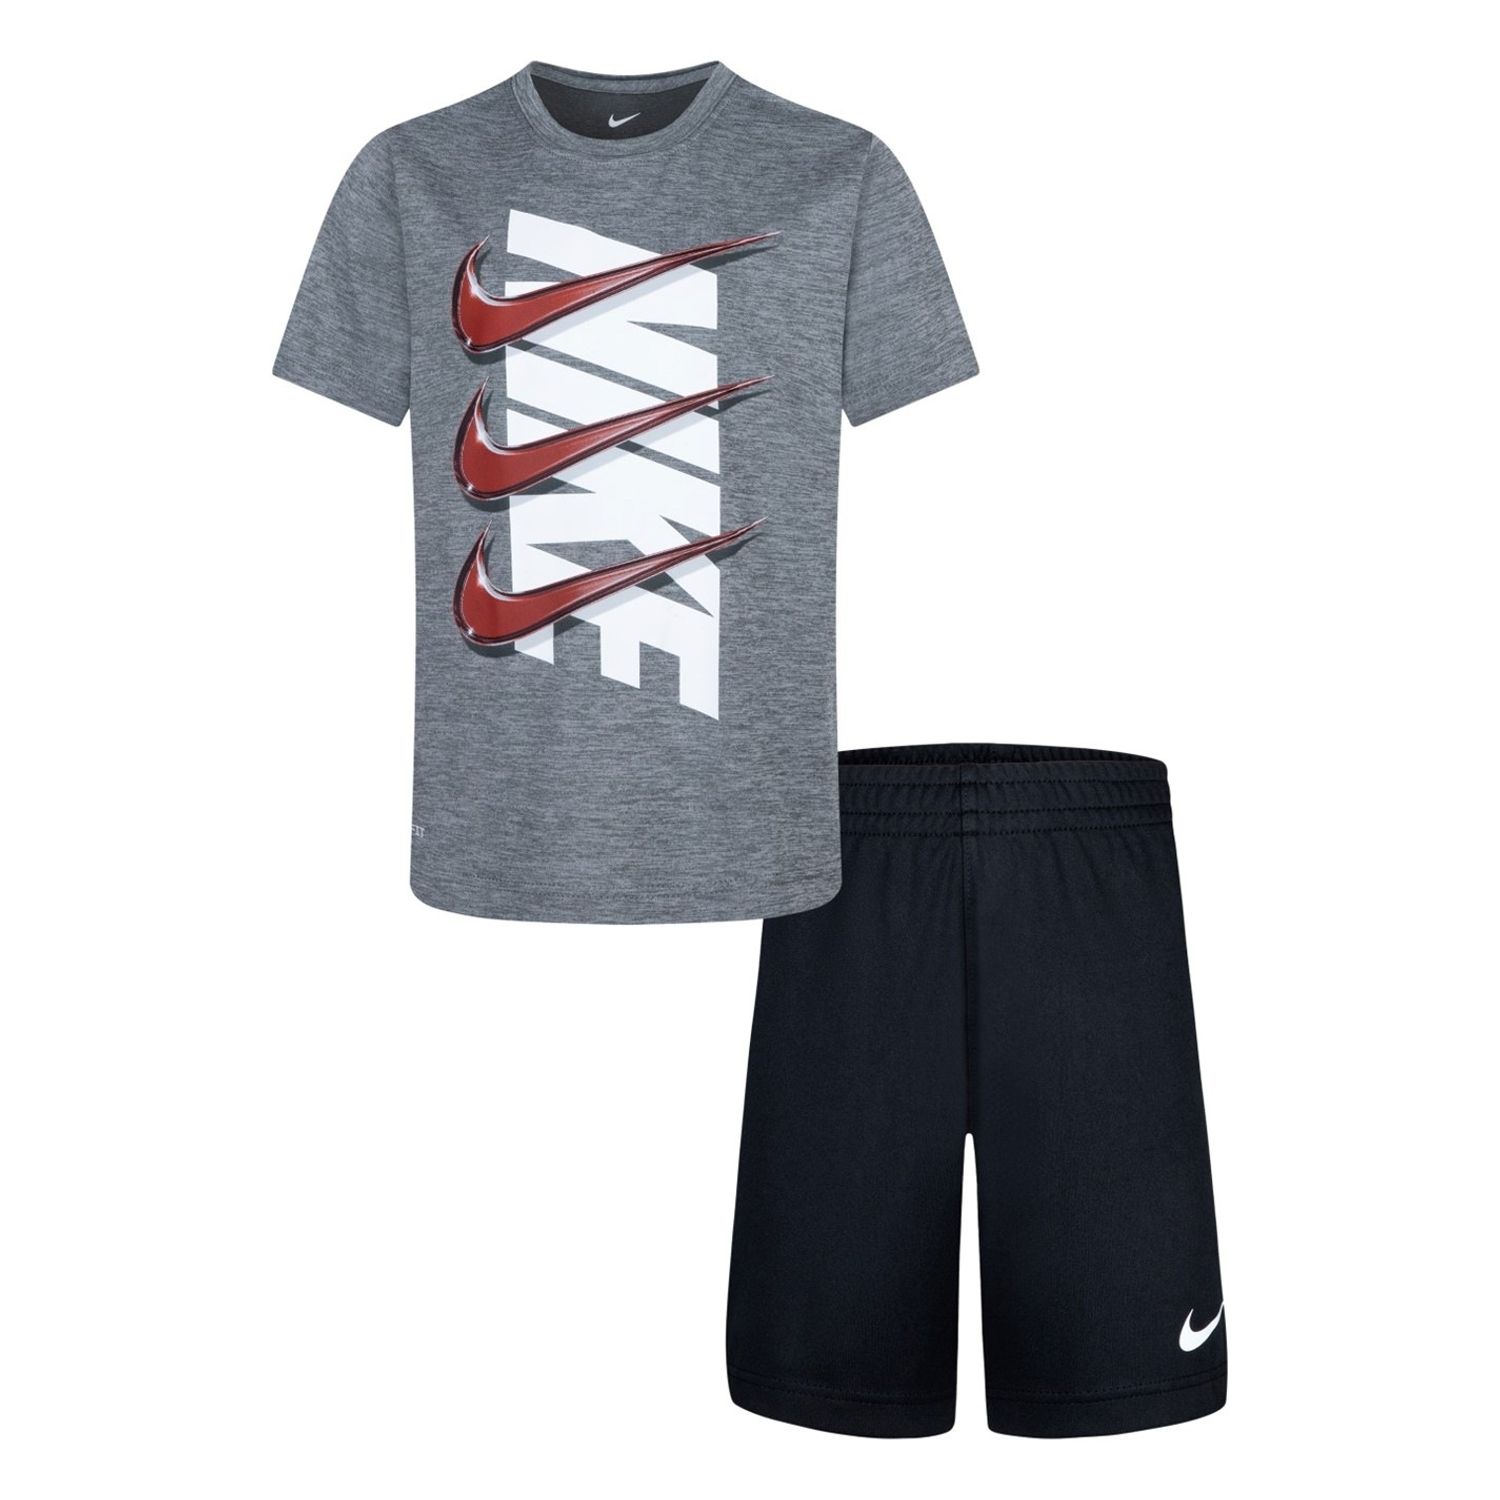 Buy Nike Kids Black & White Logo Print T-Shirt & Shorts Set for